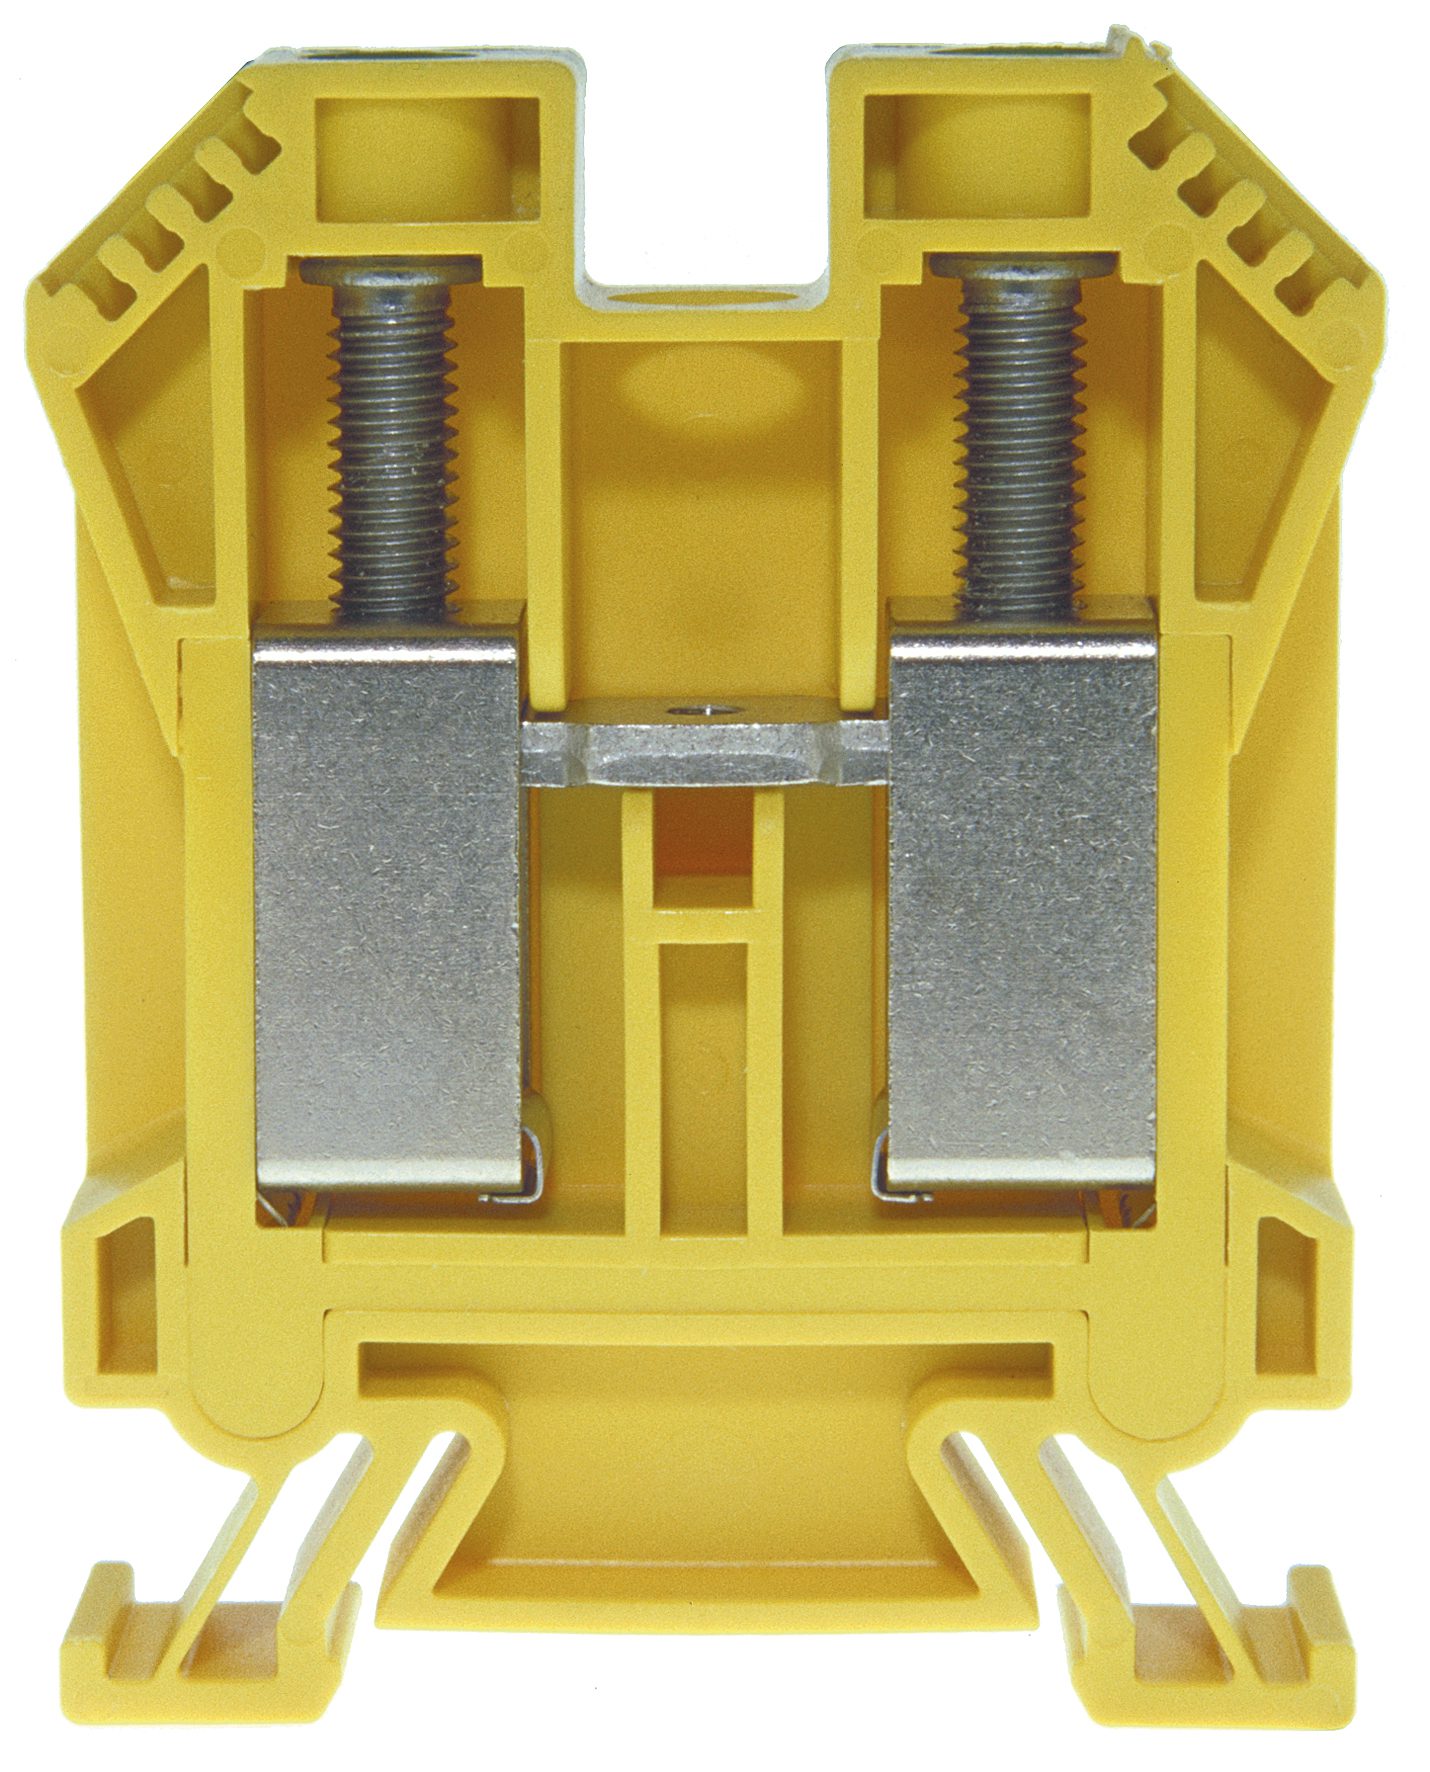 Regleta de bornes DIN35 50mm² con aislamiento verde-amarillo